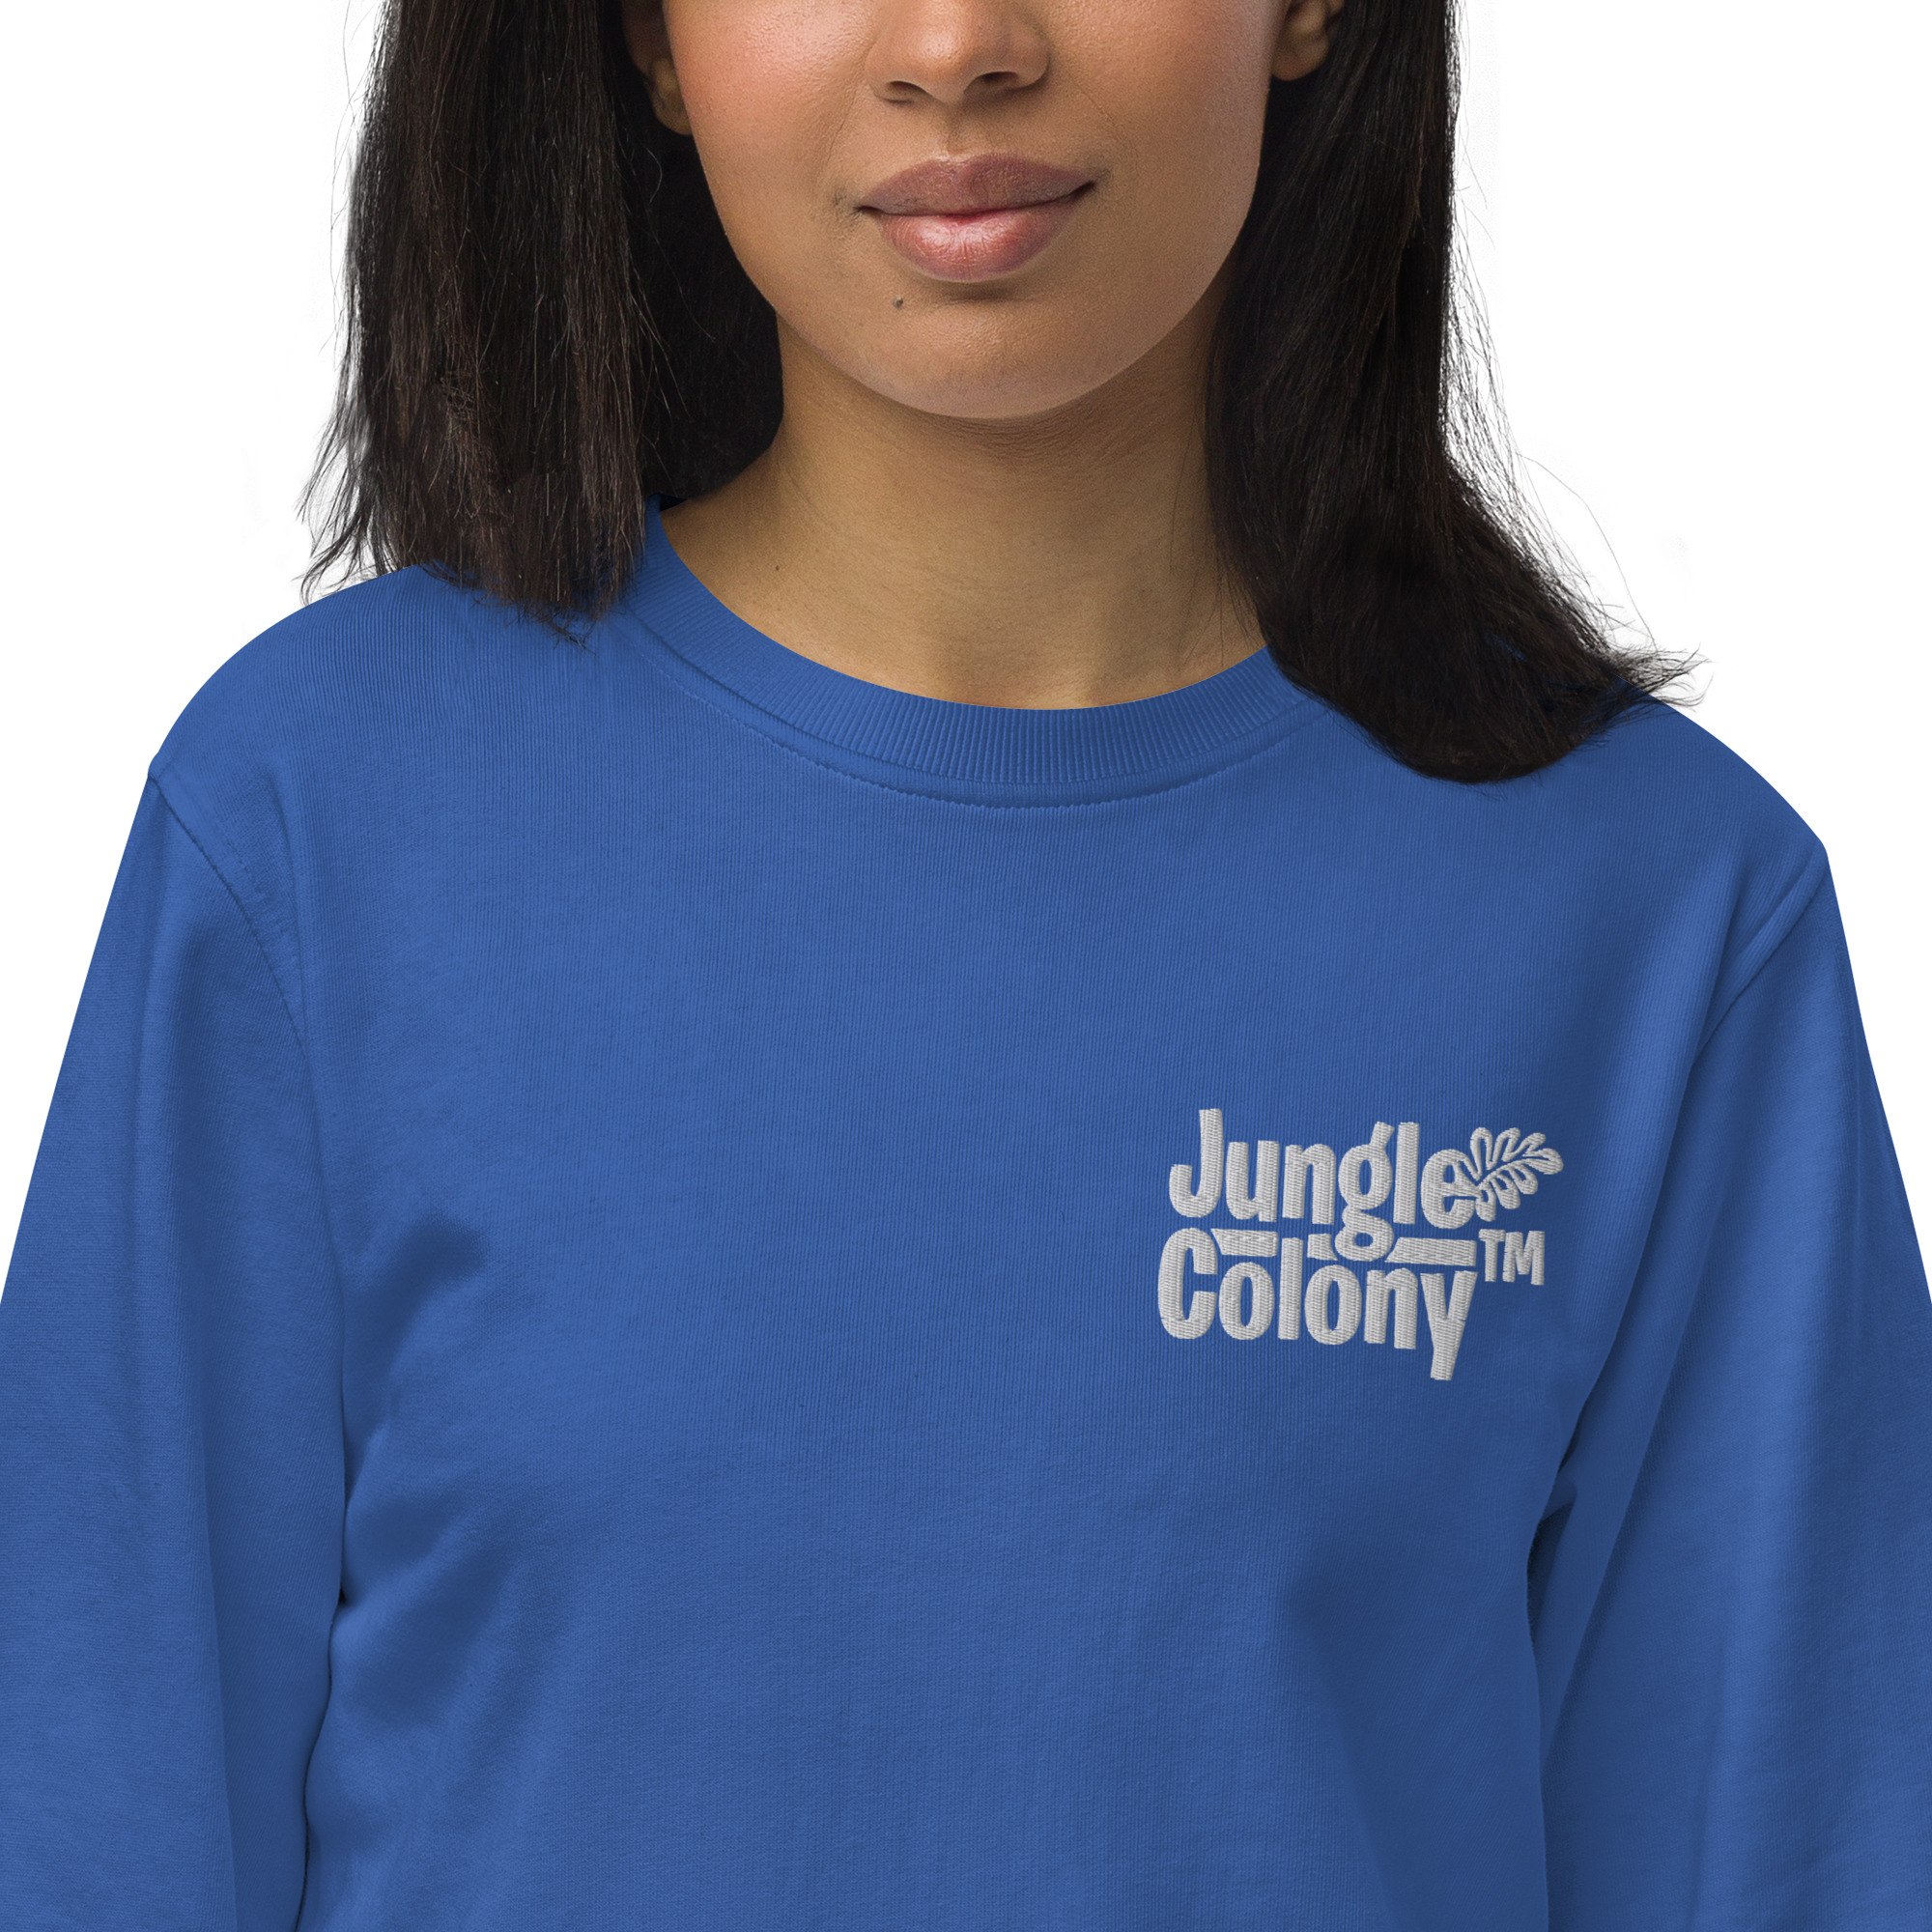 unisex-organic-sweatshirt-royal-blue-zoomed-in-64200a7837678.jpg